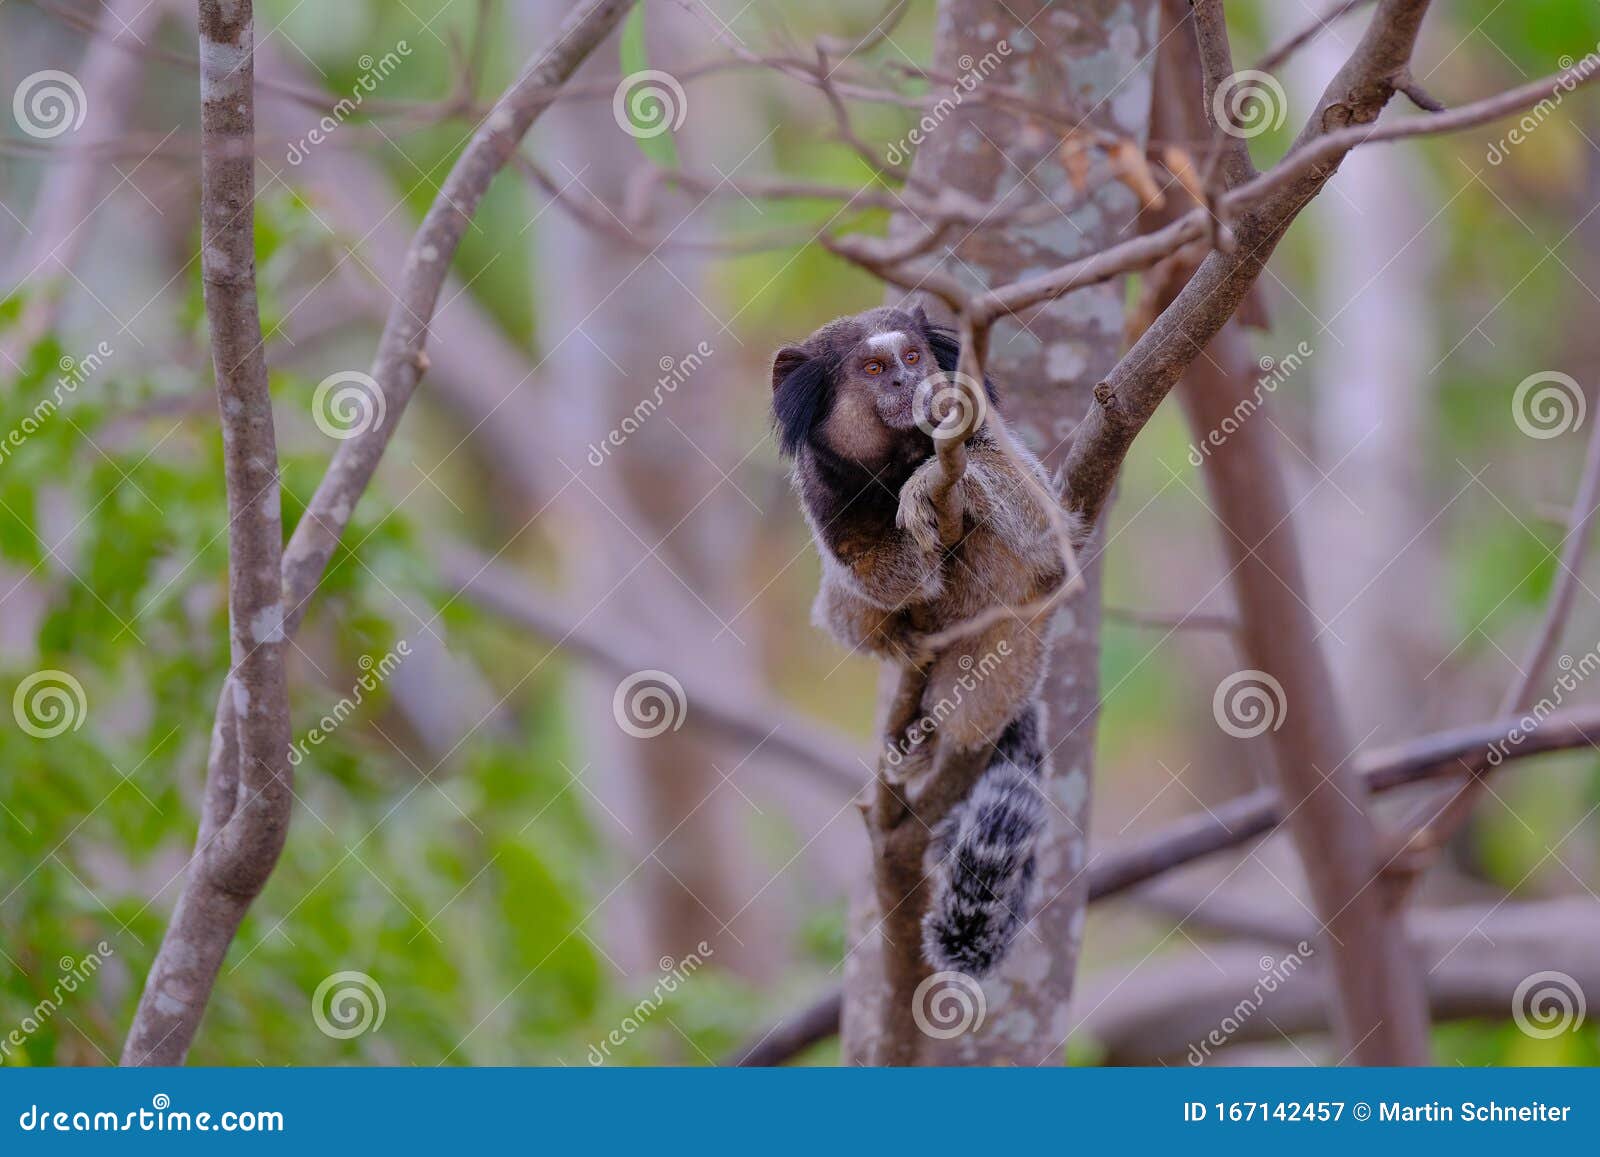 black tufted marmoset, callithrix penicillata, sitting on a branch in the trees at poco encantado, chapada diamantina